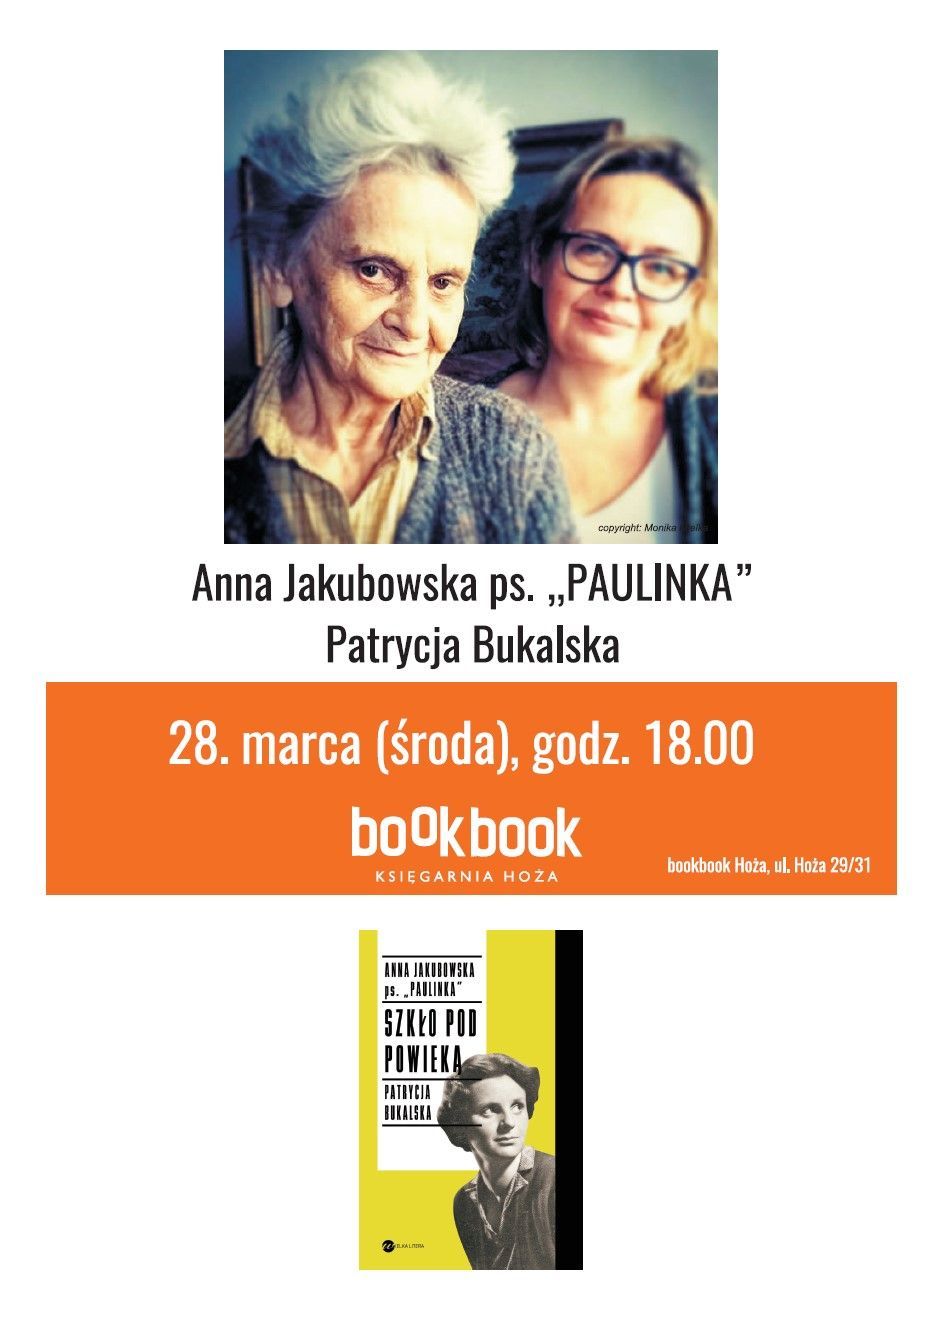 BookBook,  Anna Jakubowska ps. "Paulinka"